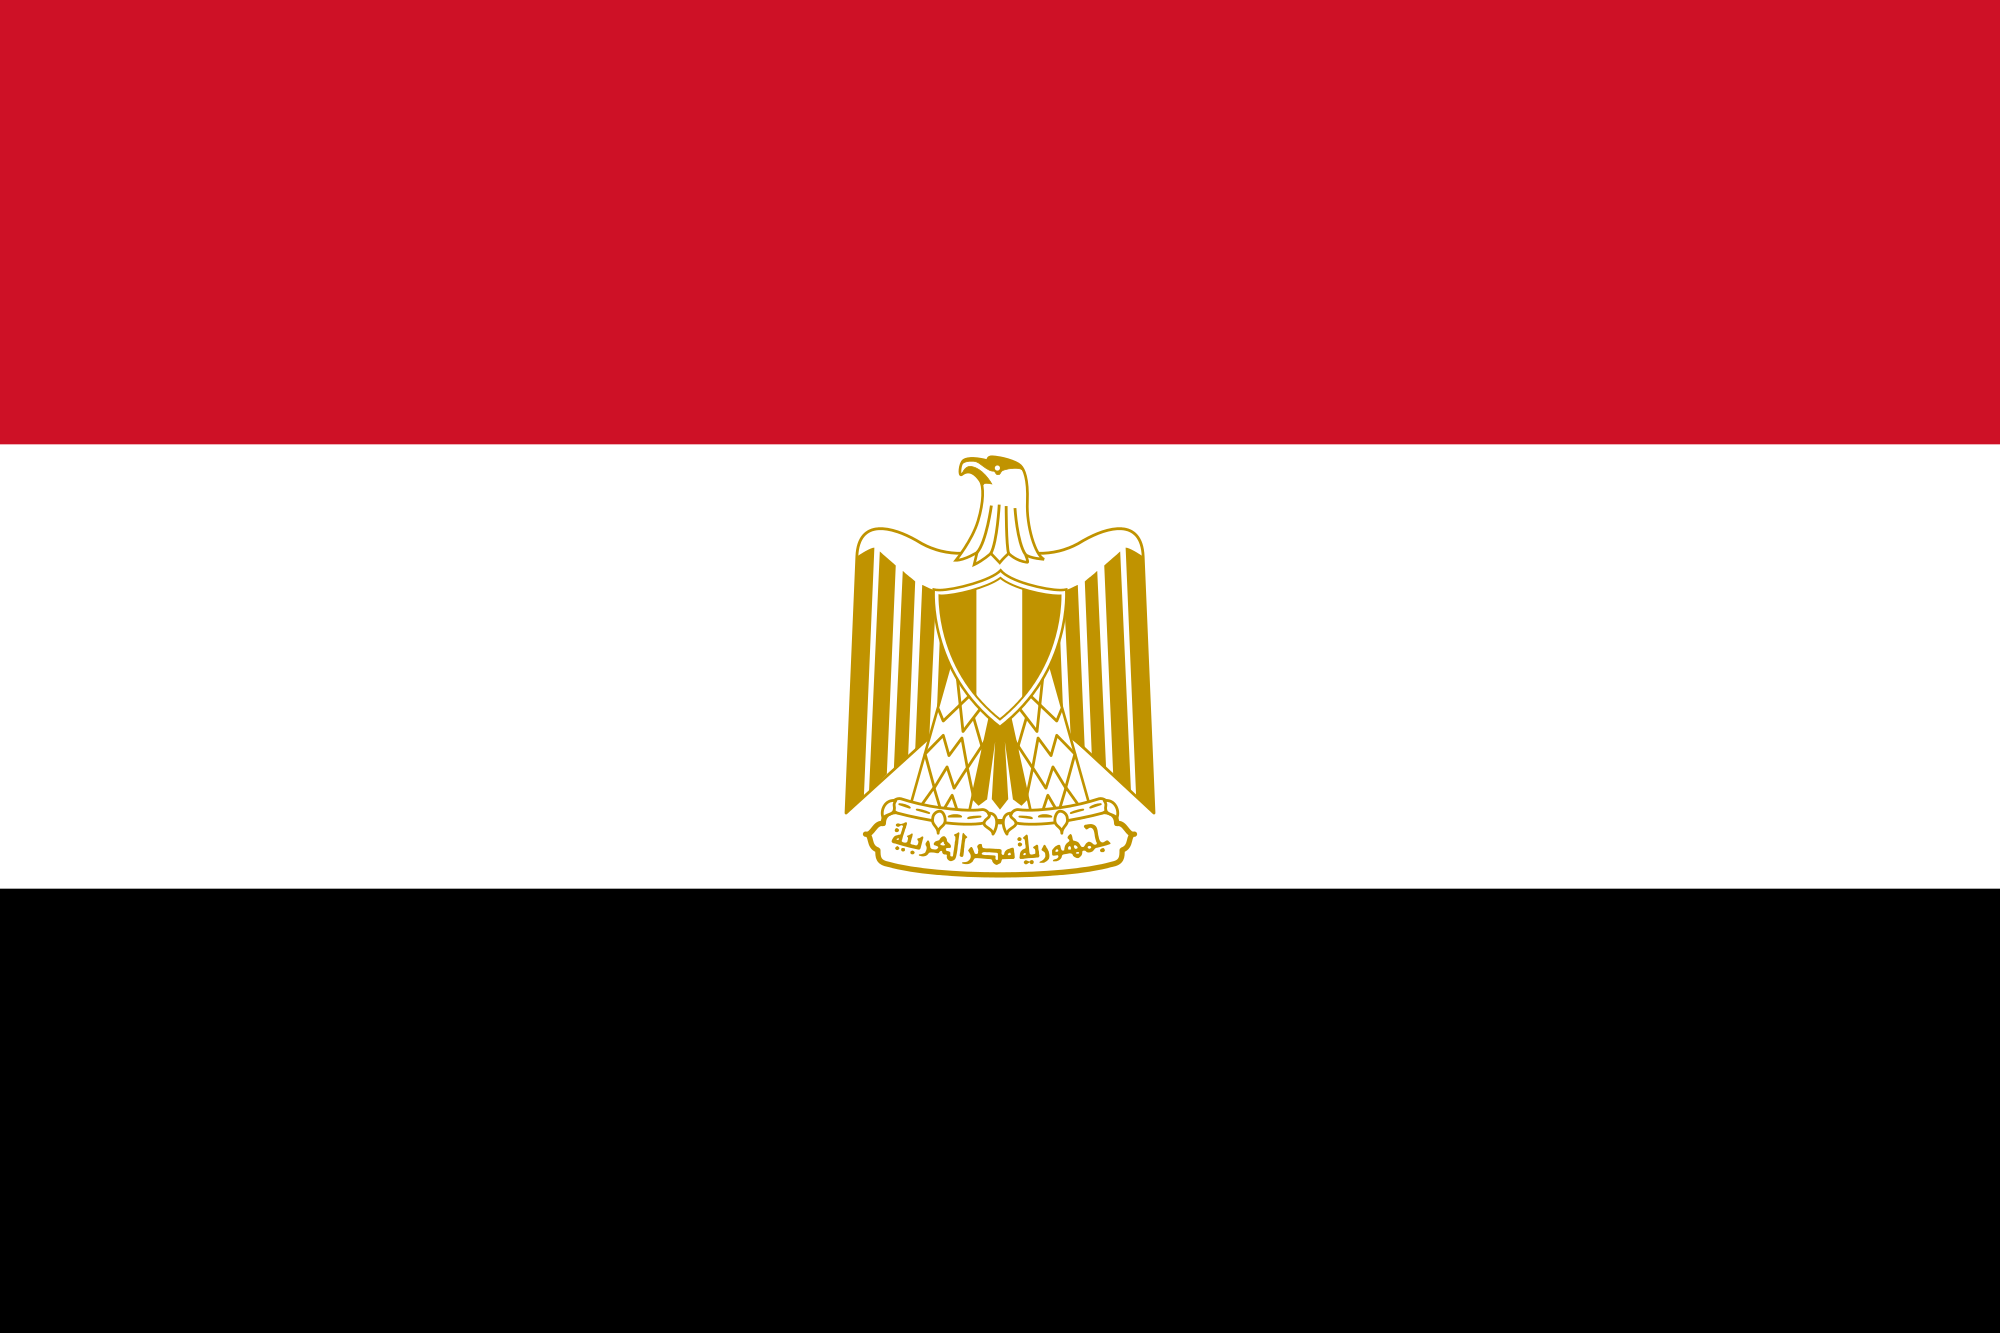 https://upload.wikimedia.org/wikipedia/commons/thumb/f/fe/Flag_of_Egypt.svg/2000px-Flag_of_Egypt.svg.png